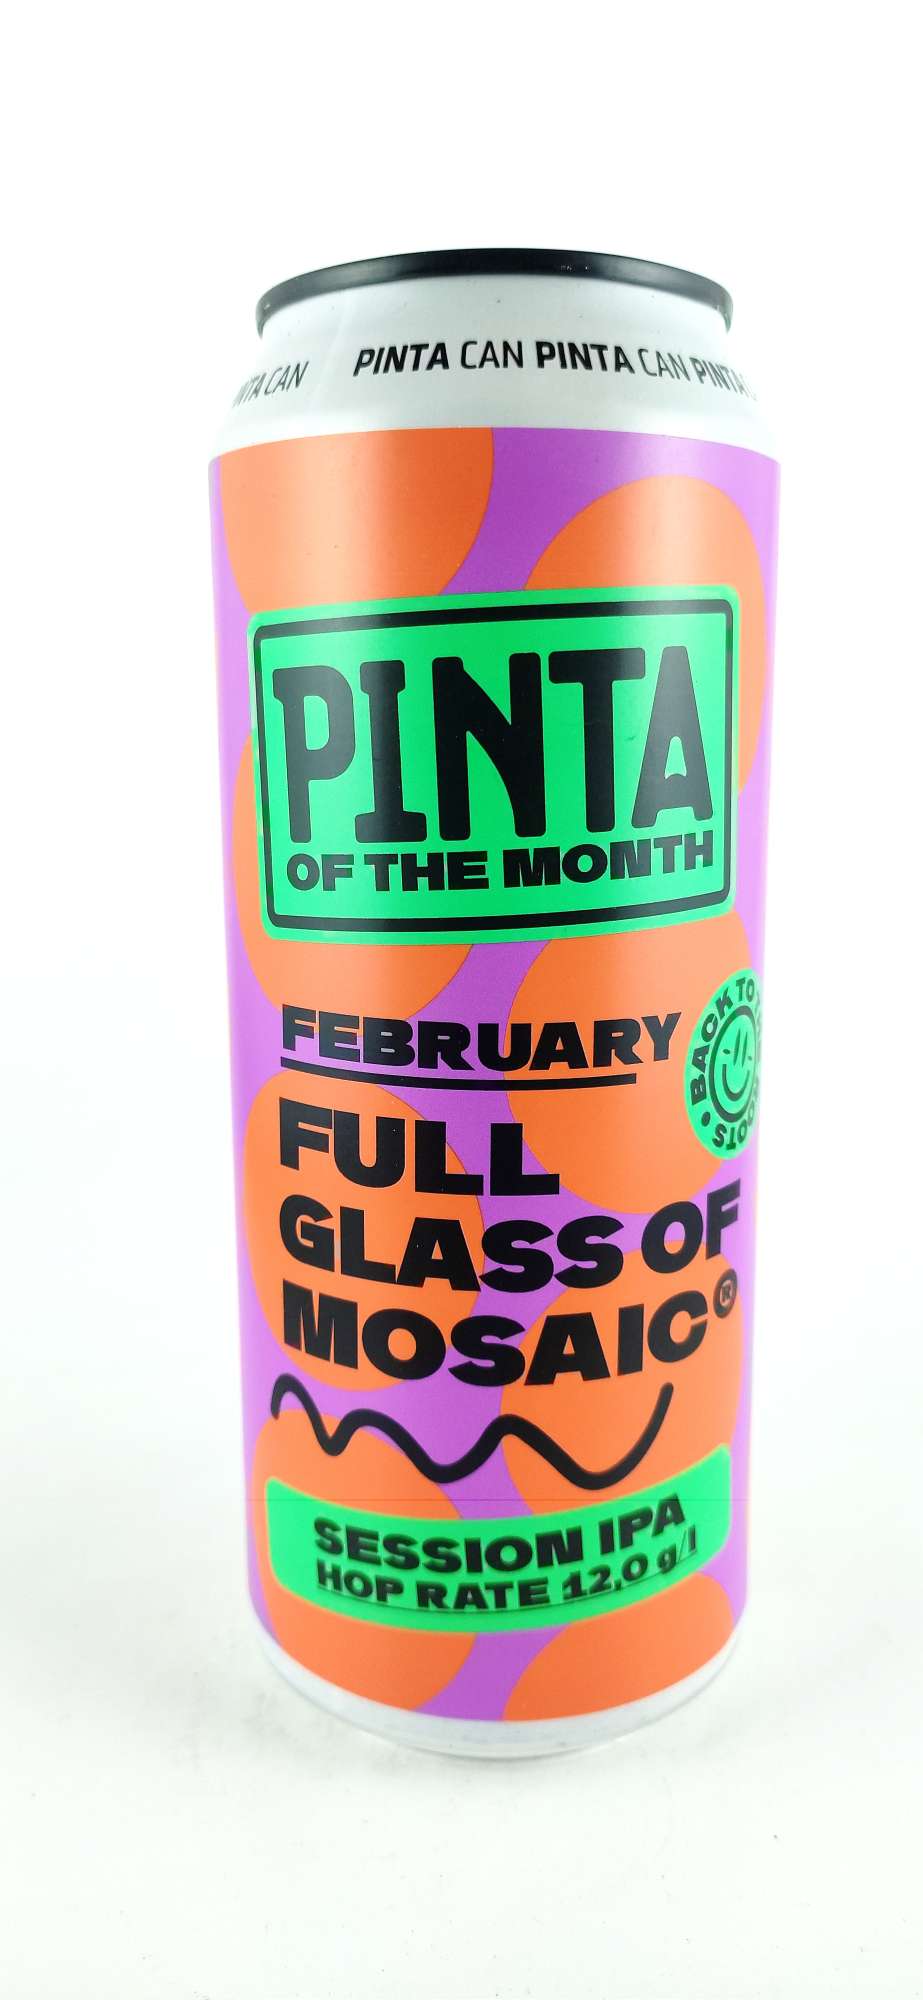 Pinta Full Glass of Mosaic IPA 13°